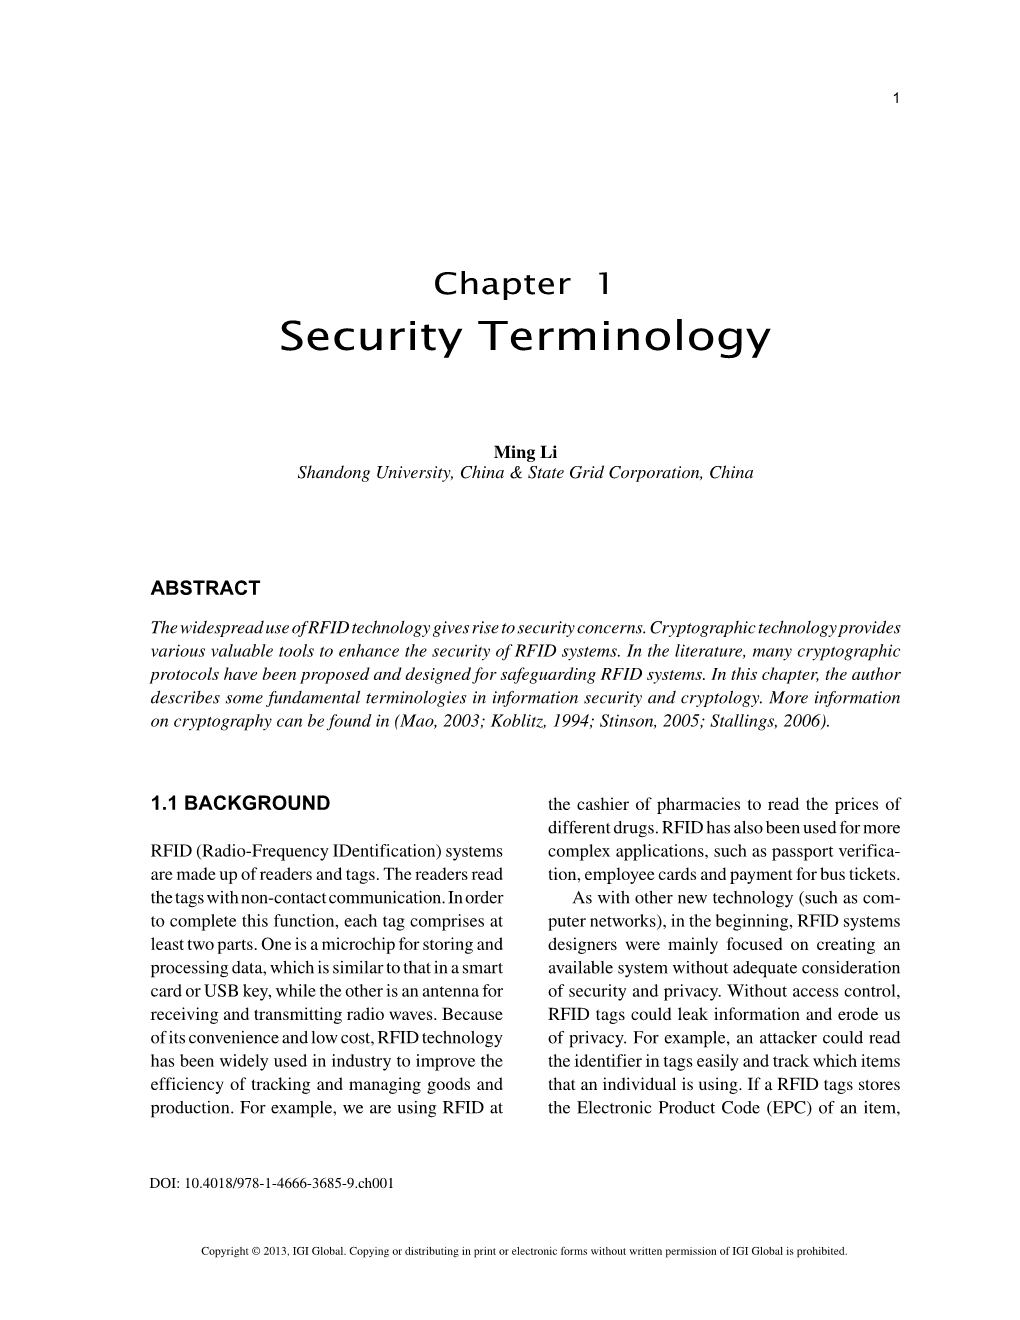 Security Terminology